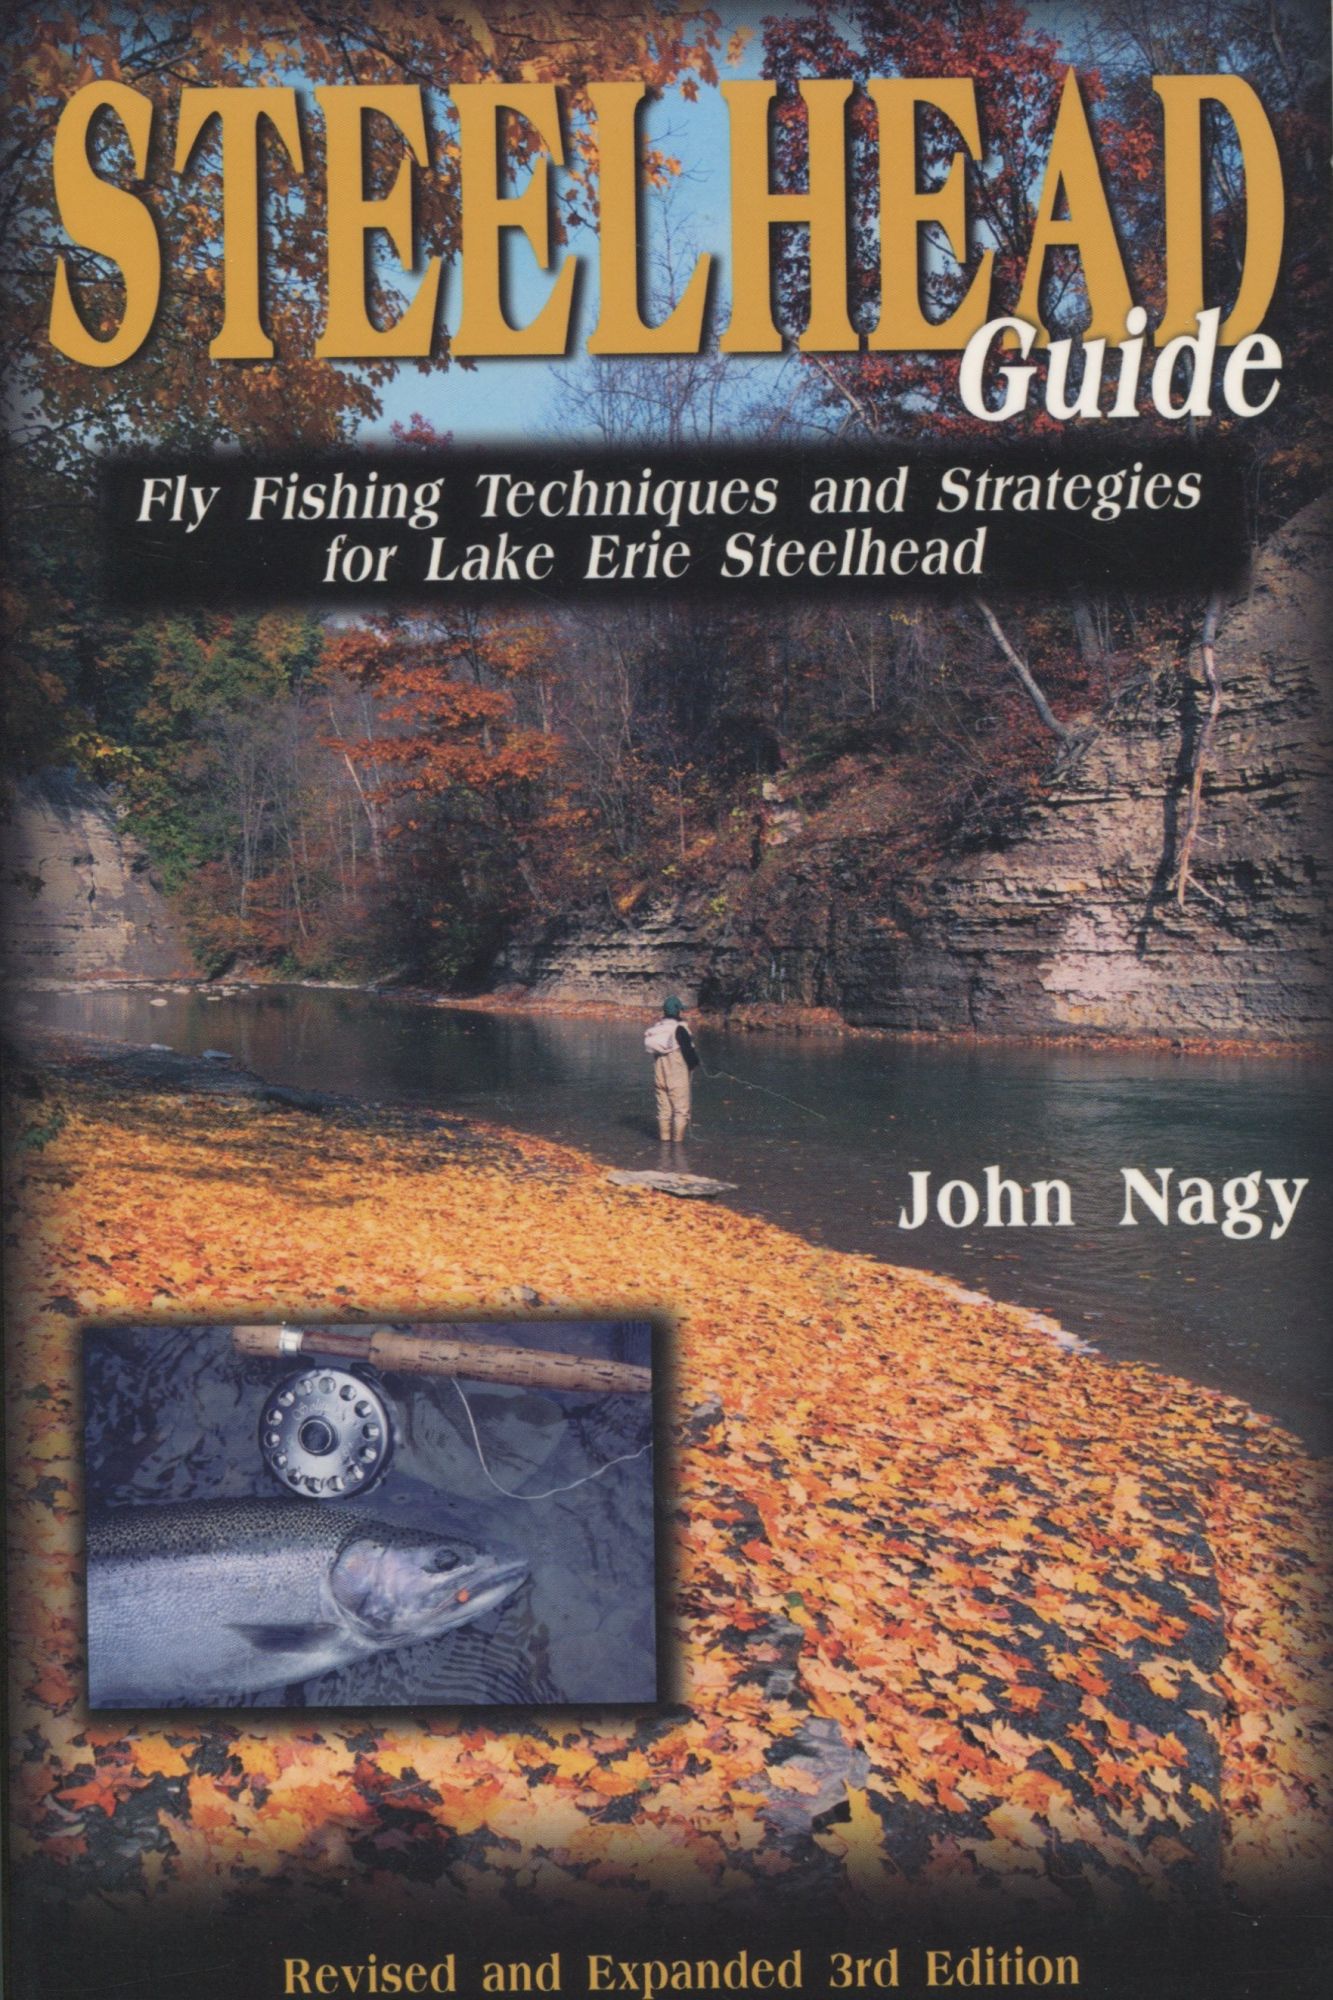 Fly Fishing Guide for Erie Steelhead